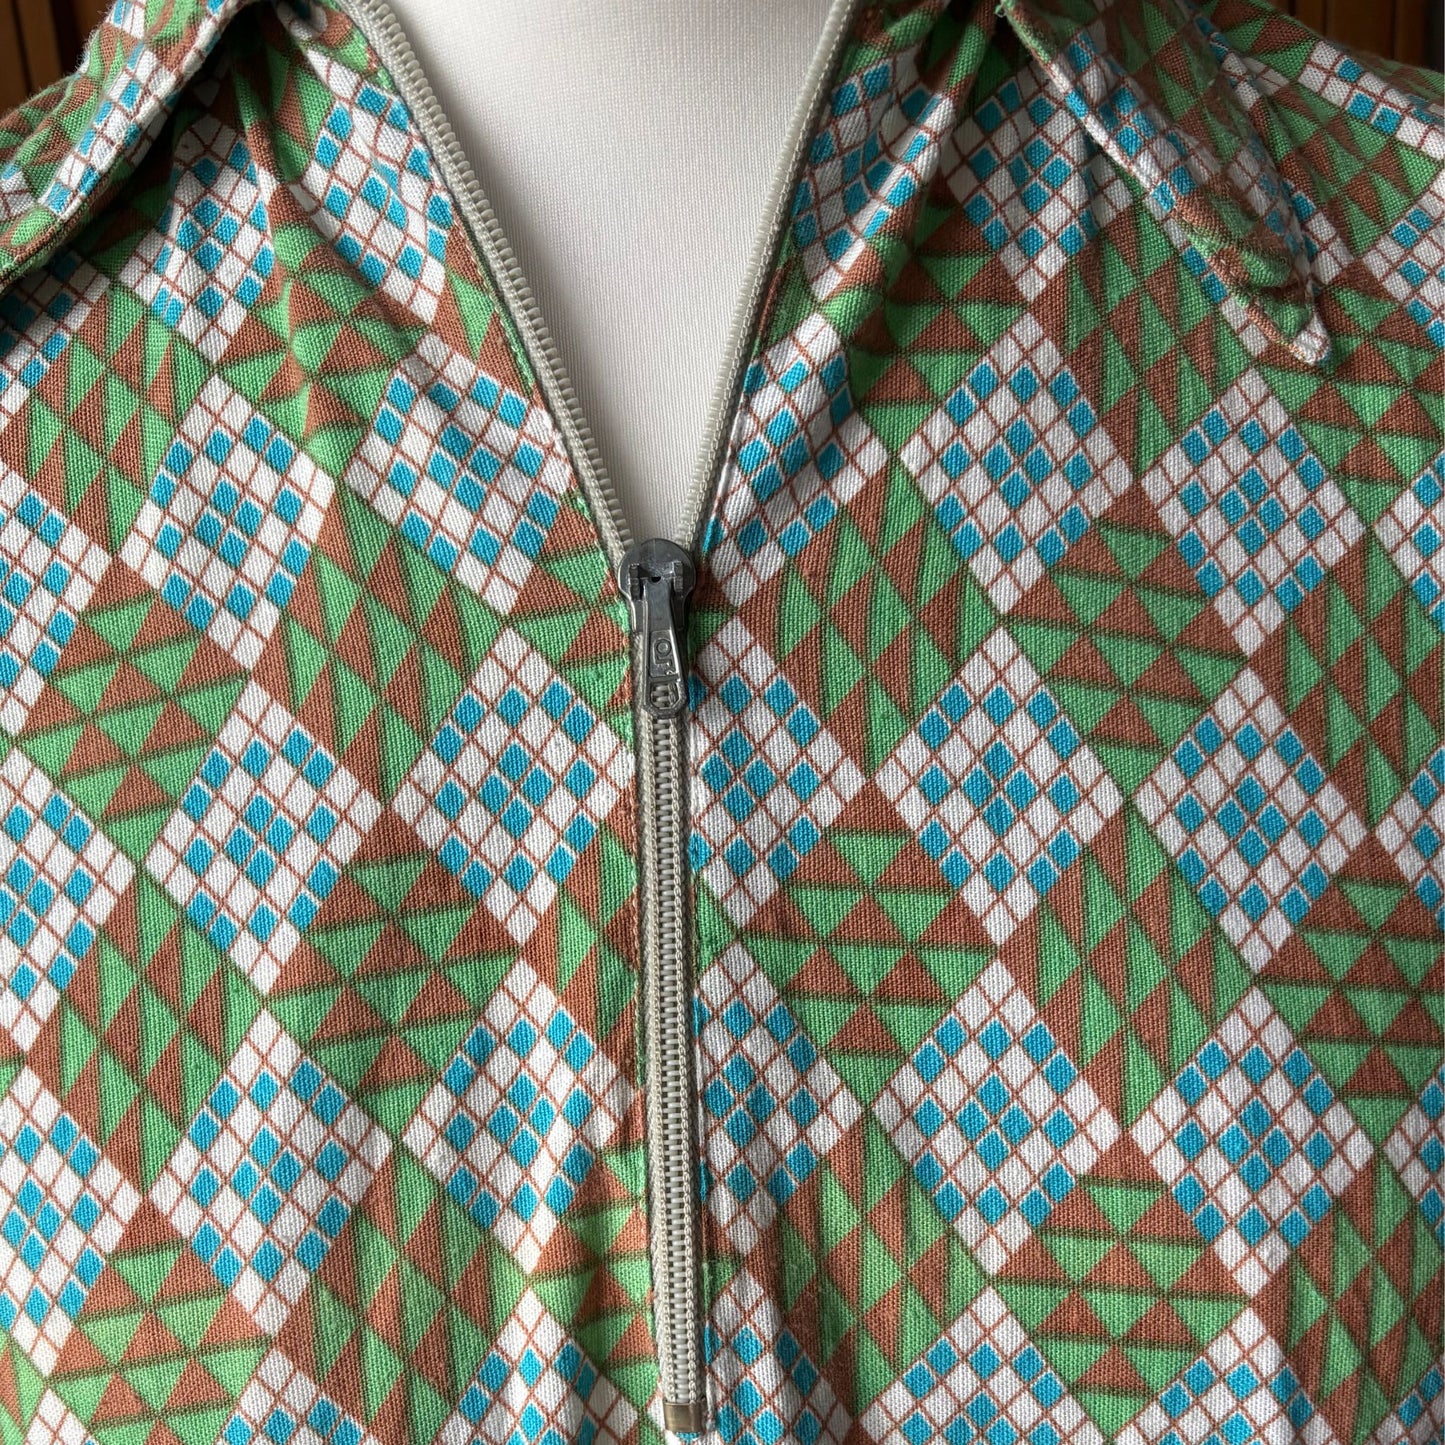 70s Cotton Geometric Print Shirt with Zip  - Classic Retro Style. Approx UK size M - L ( men) 16-28 (women )